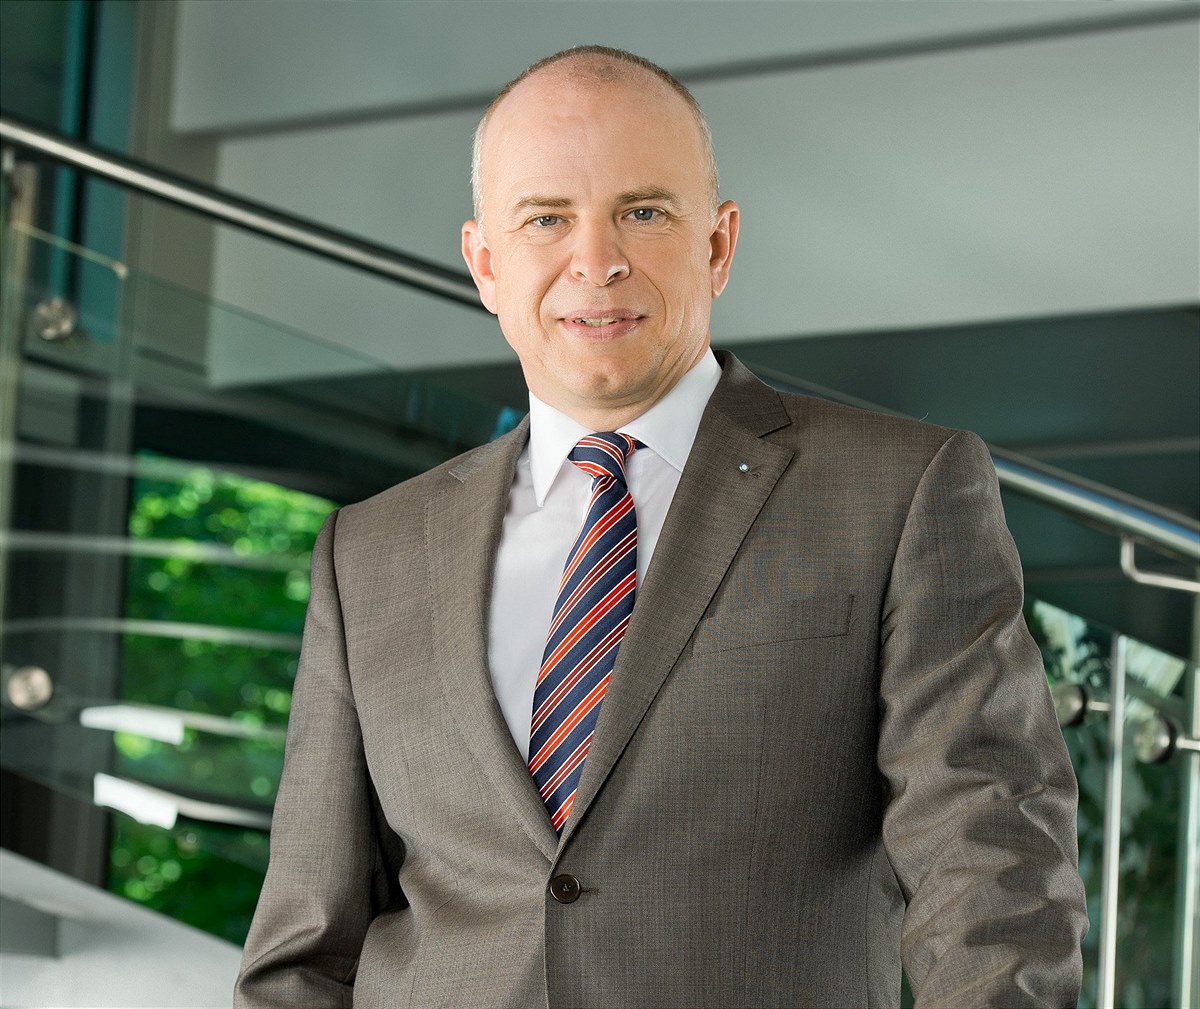 ZÜBLIN-board member Dr. Ulrich Klotz